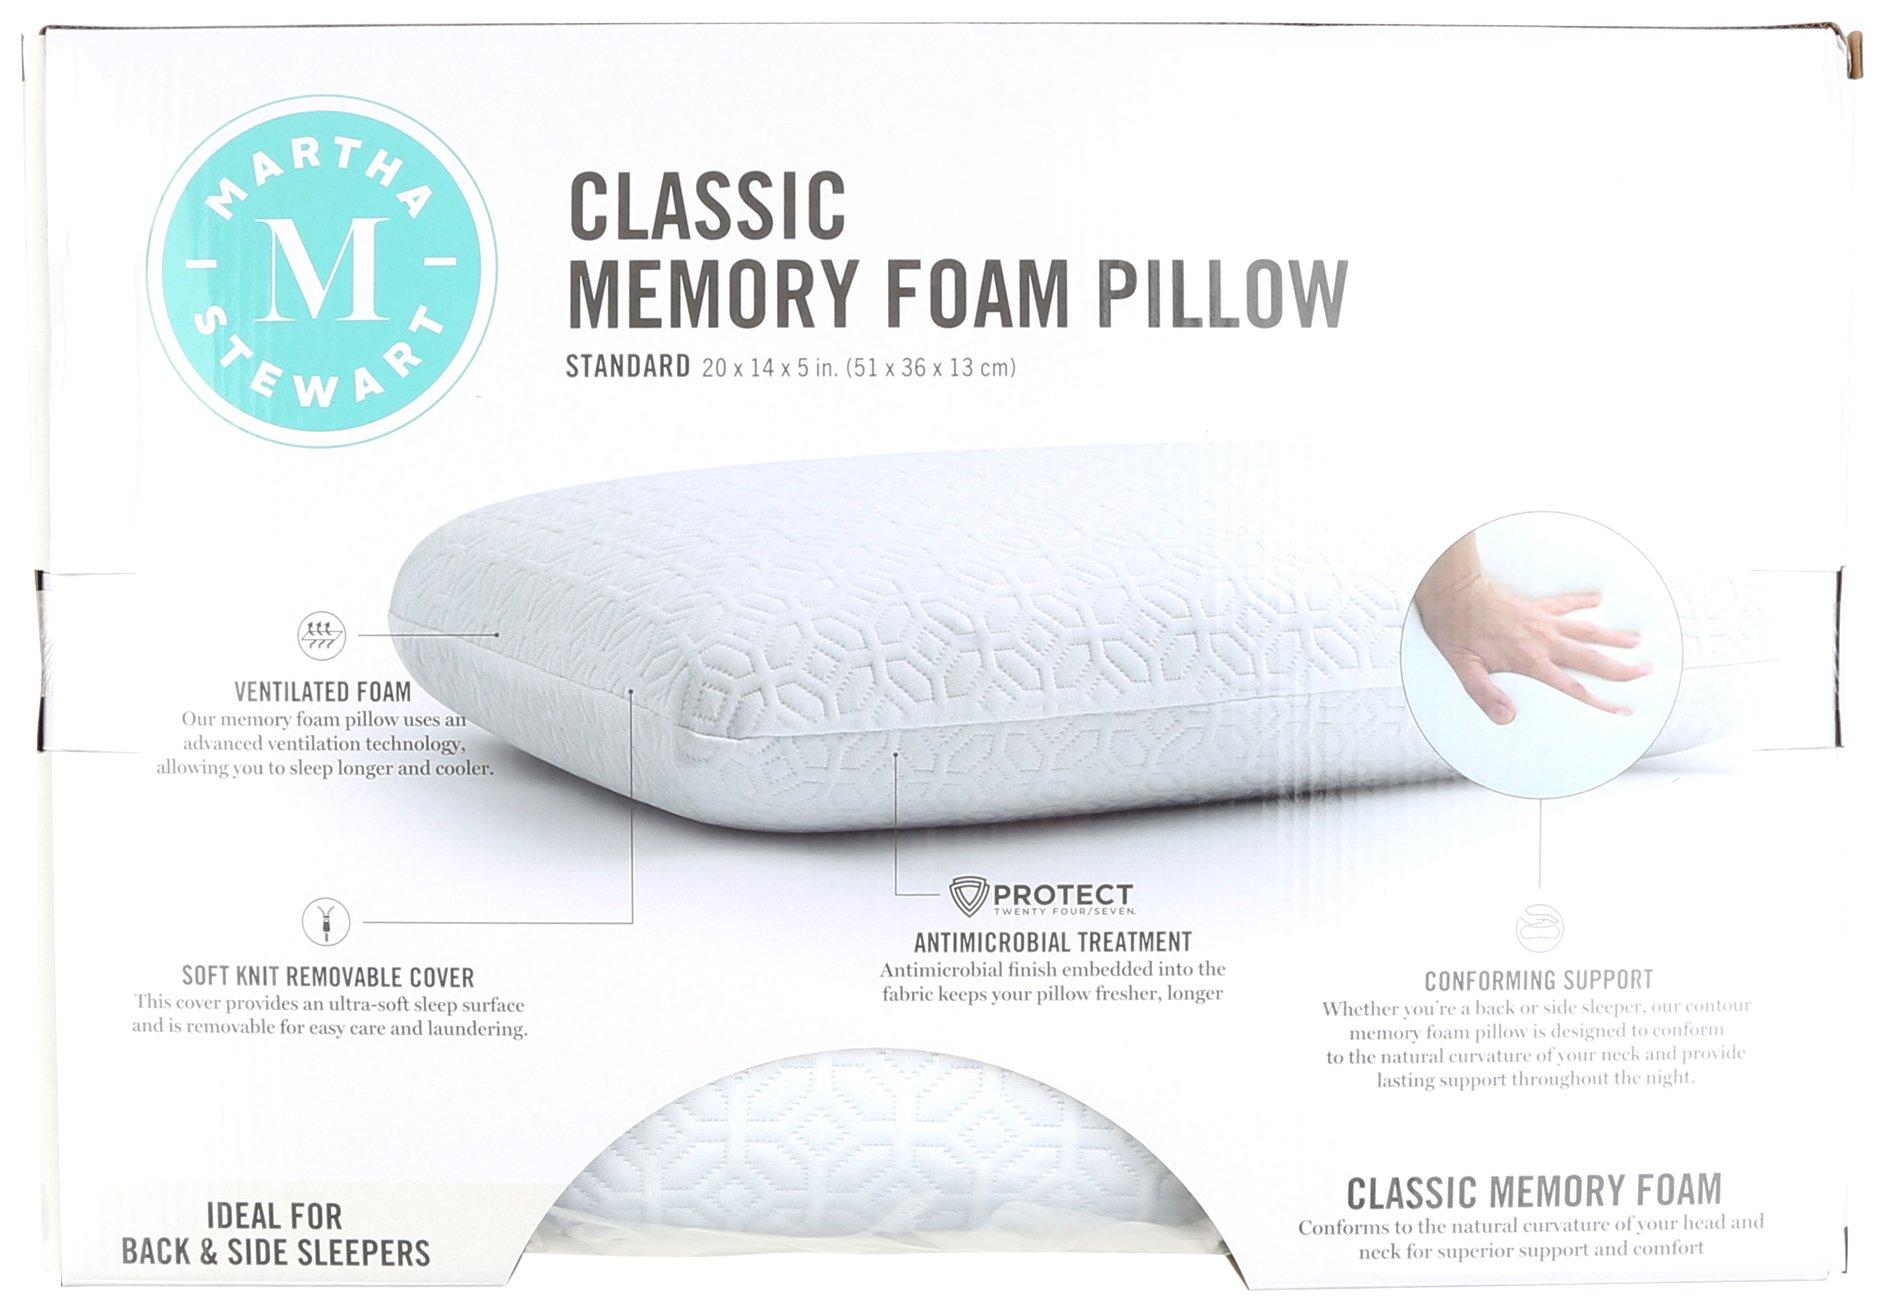 https://images.beallsflorida.com/i/beallsflorida/665-1700-4834-00-yyy/*Classic-Memory-Foam-Pillow*?$BR_thumbnail$&fmt=auto&qlt=default